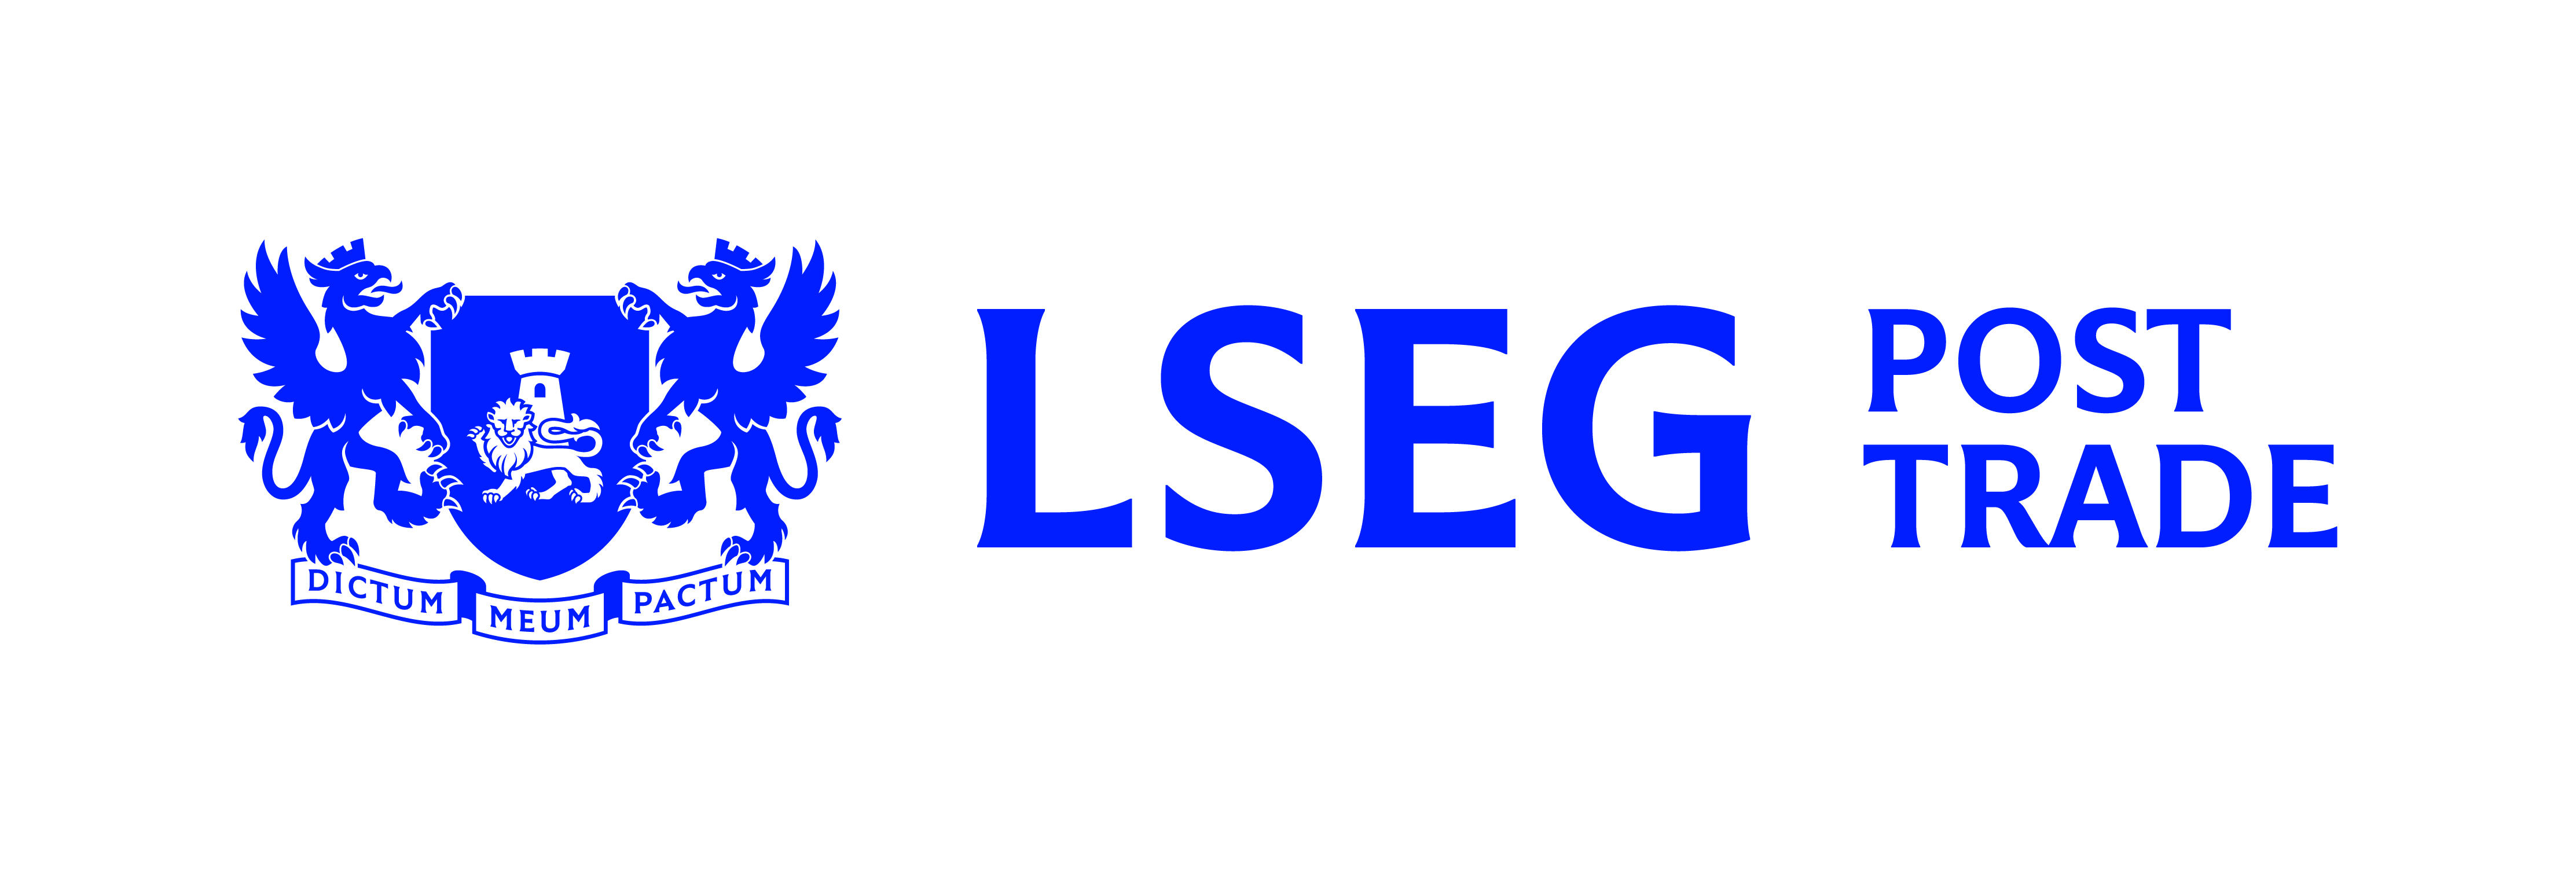 LSEG Post Trade logo